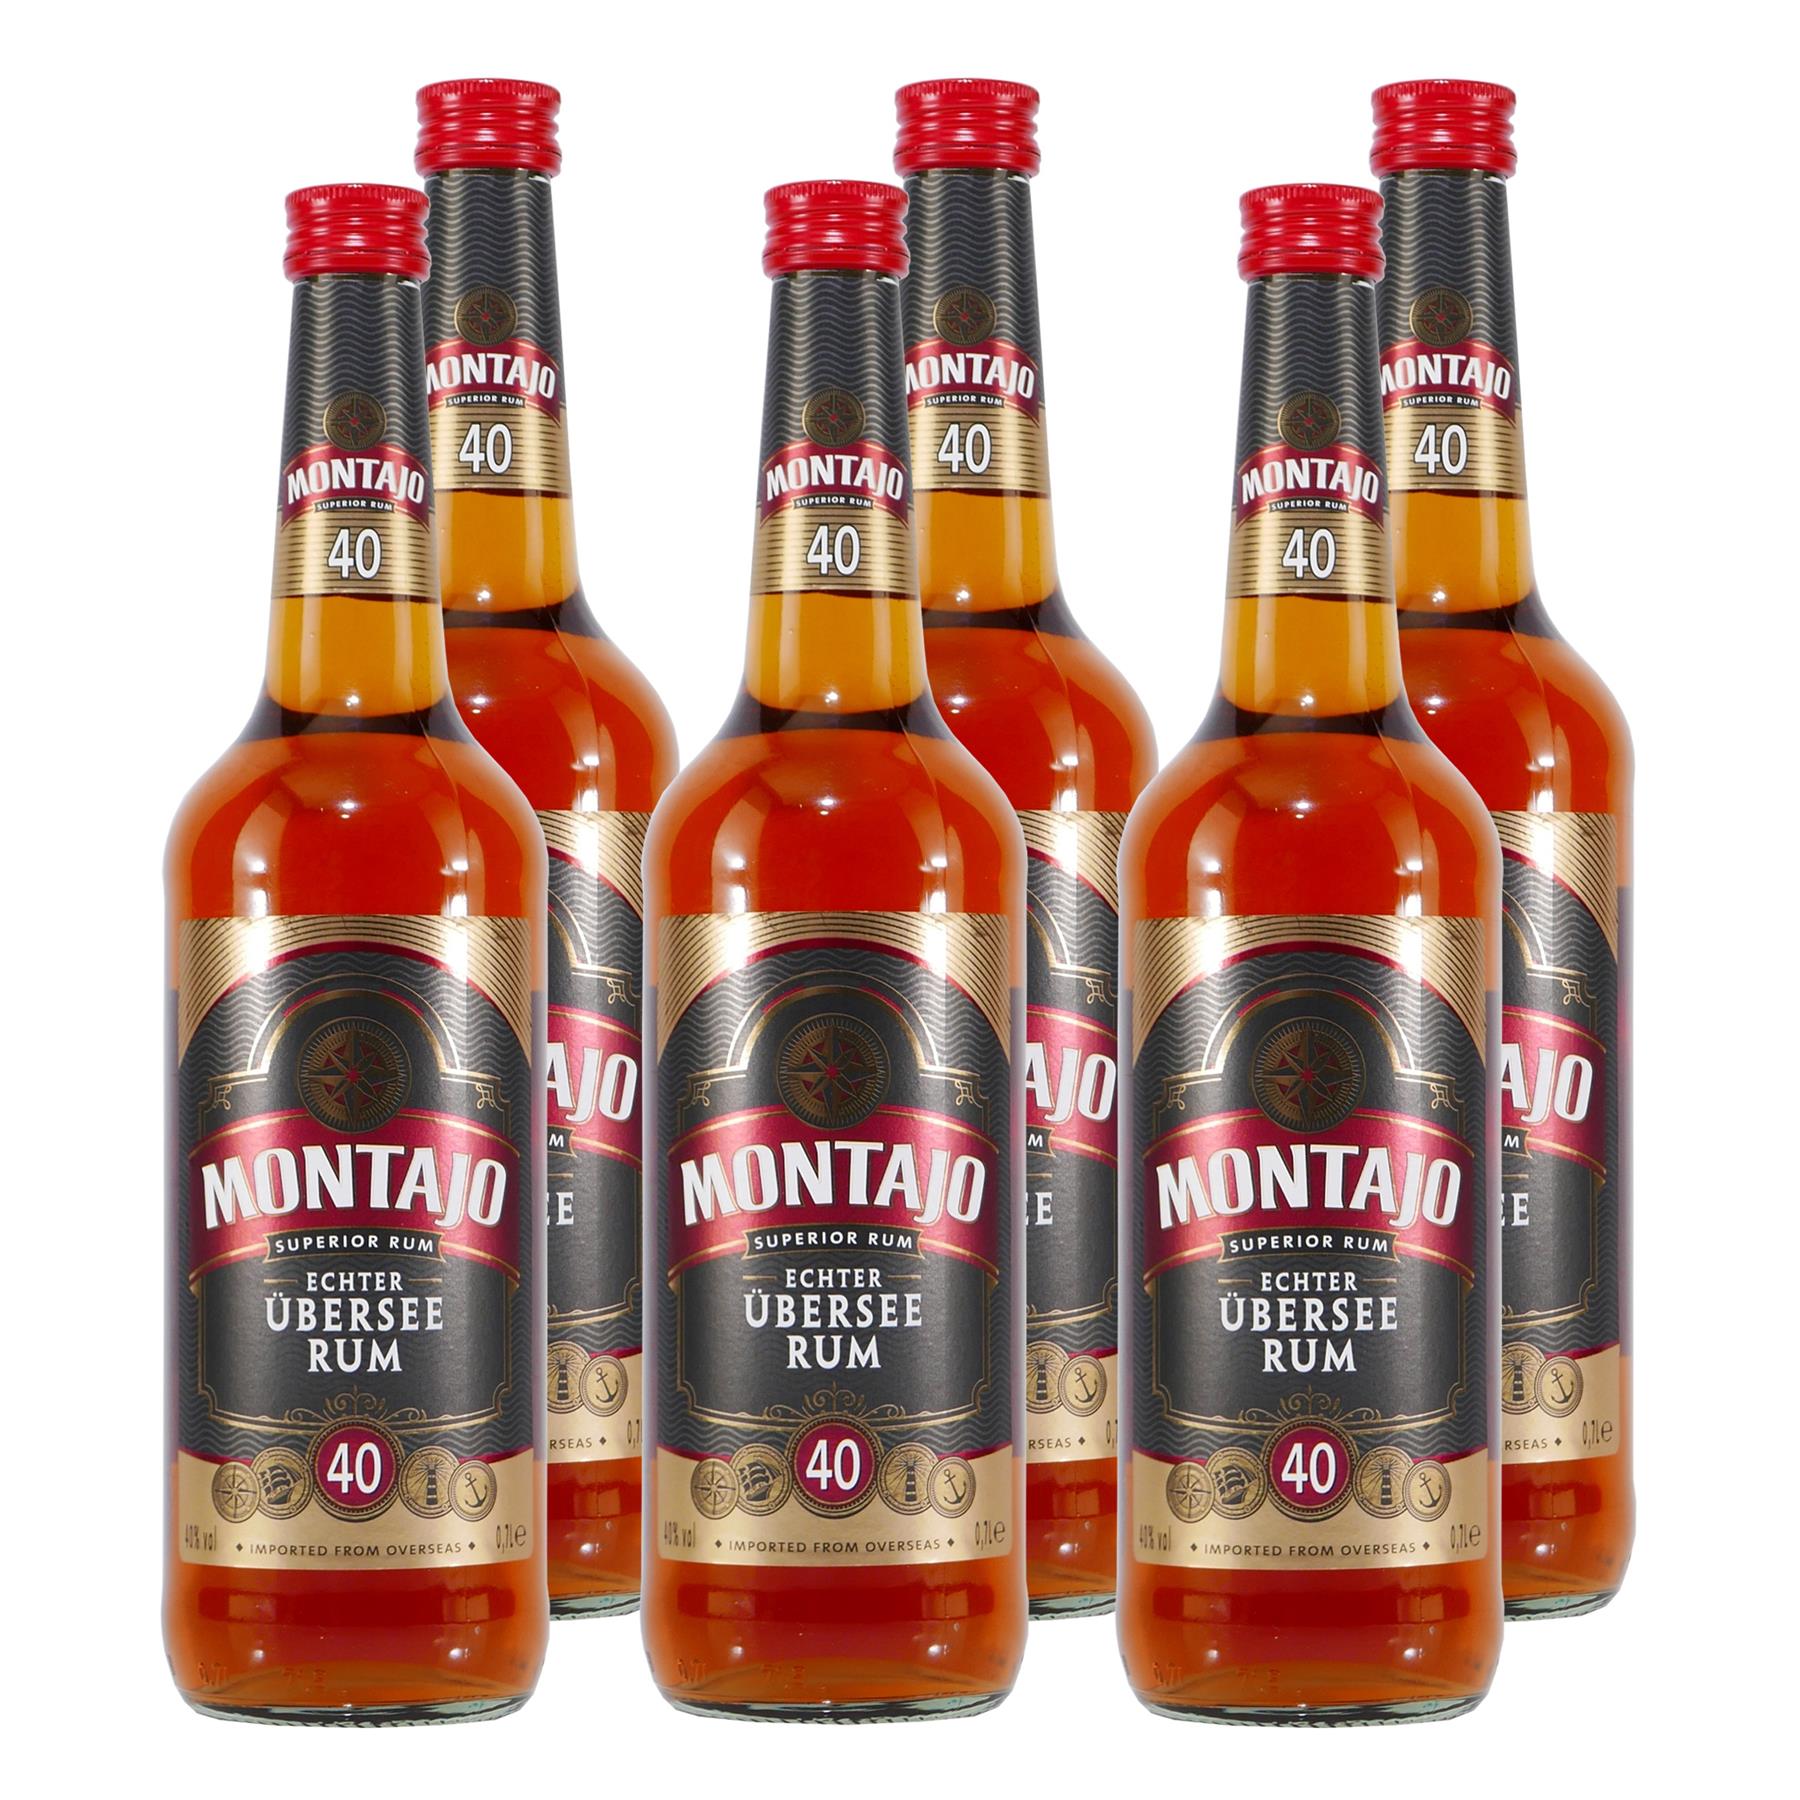 MONTAJO Übersee Rum (6 x 0,7L)